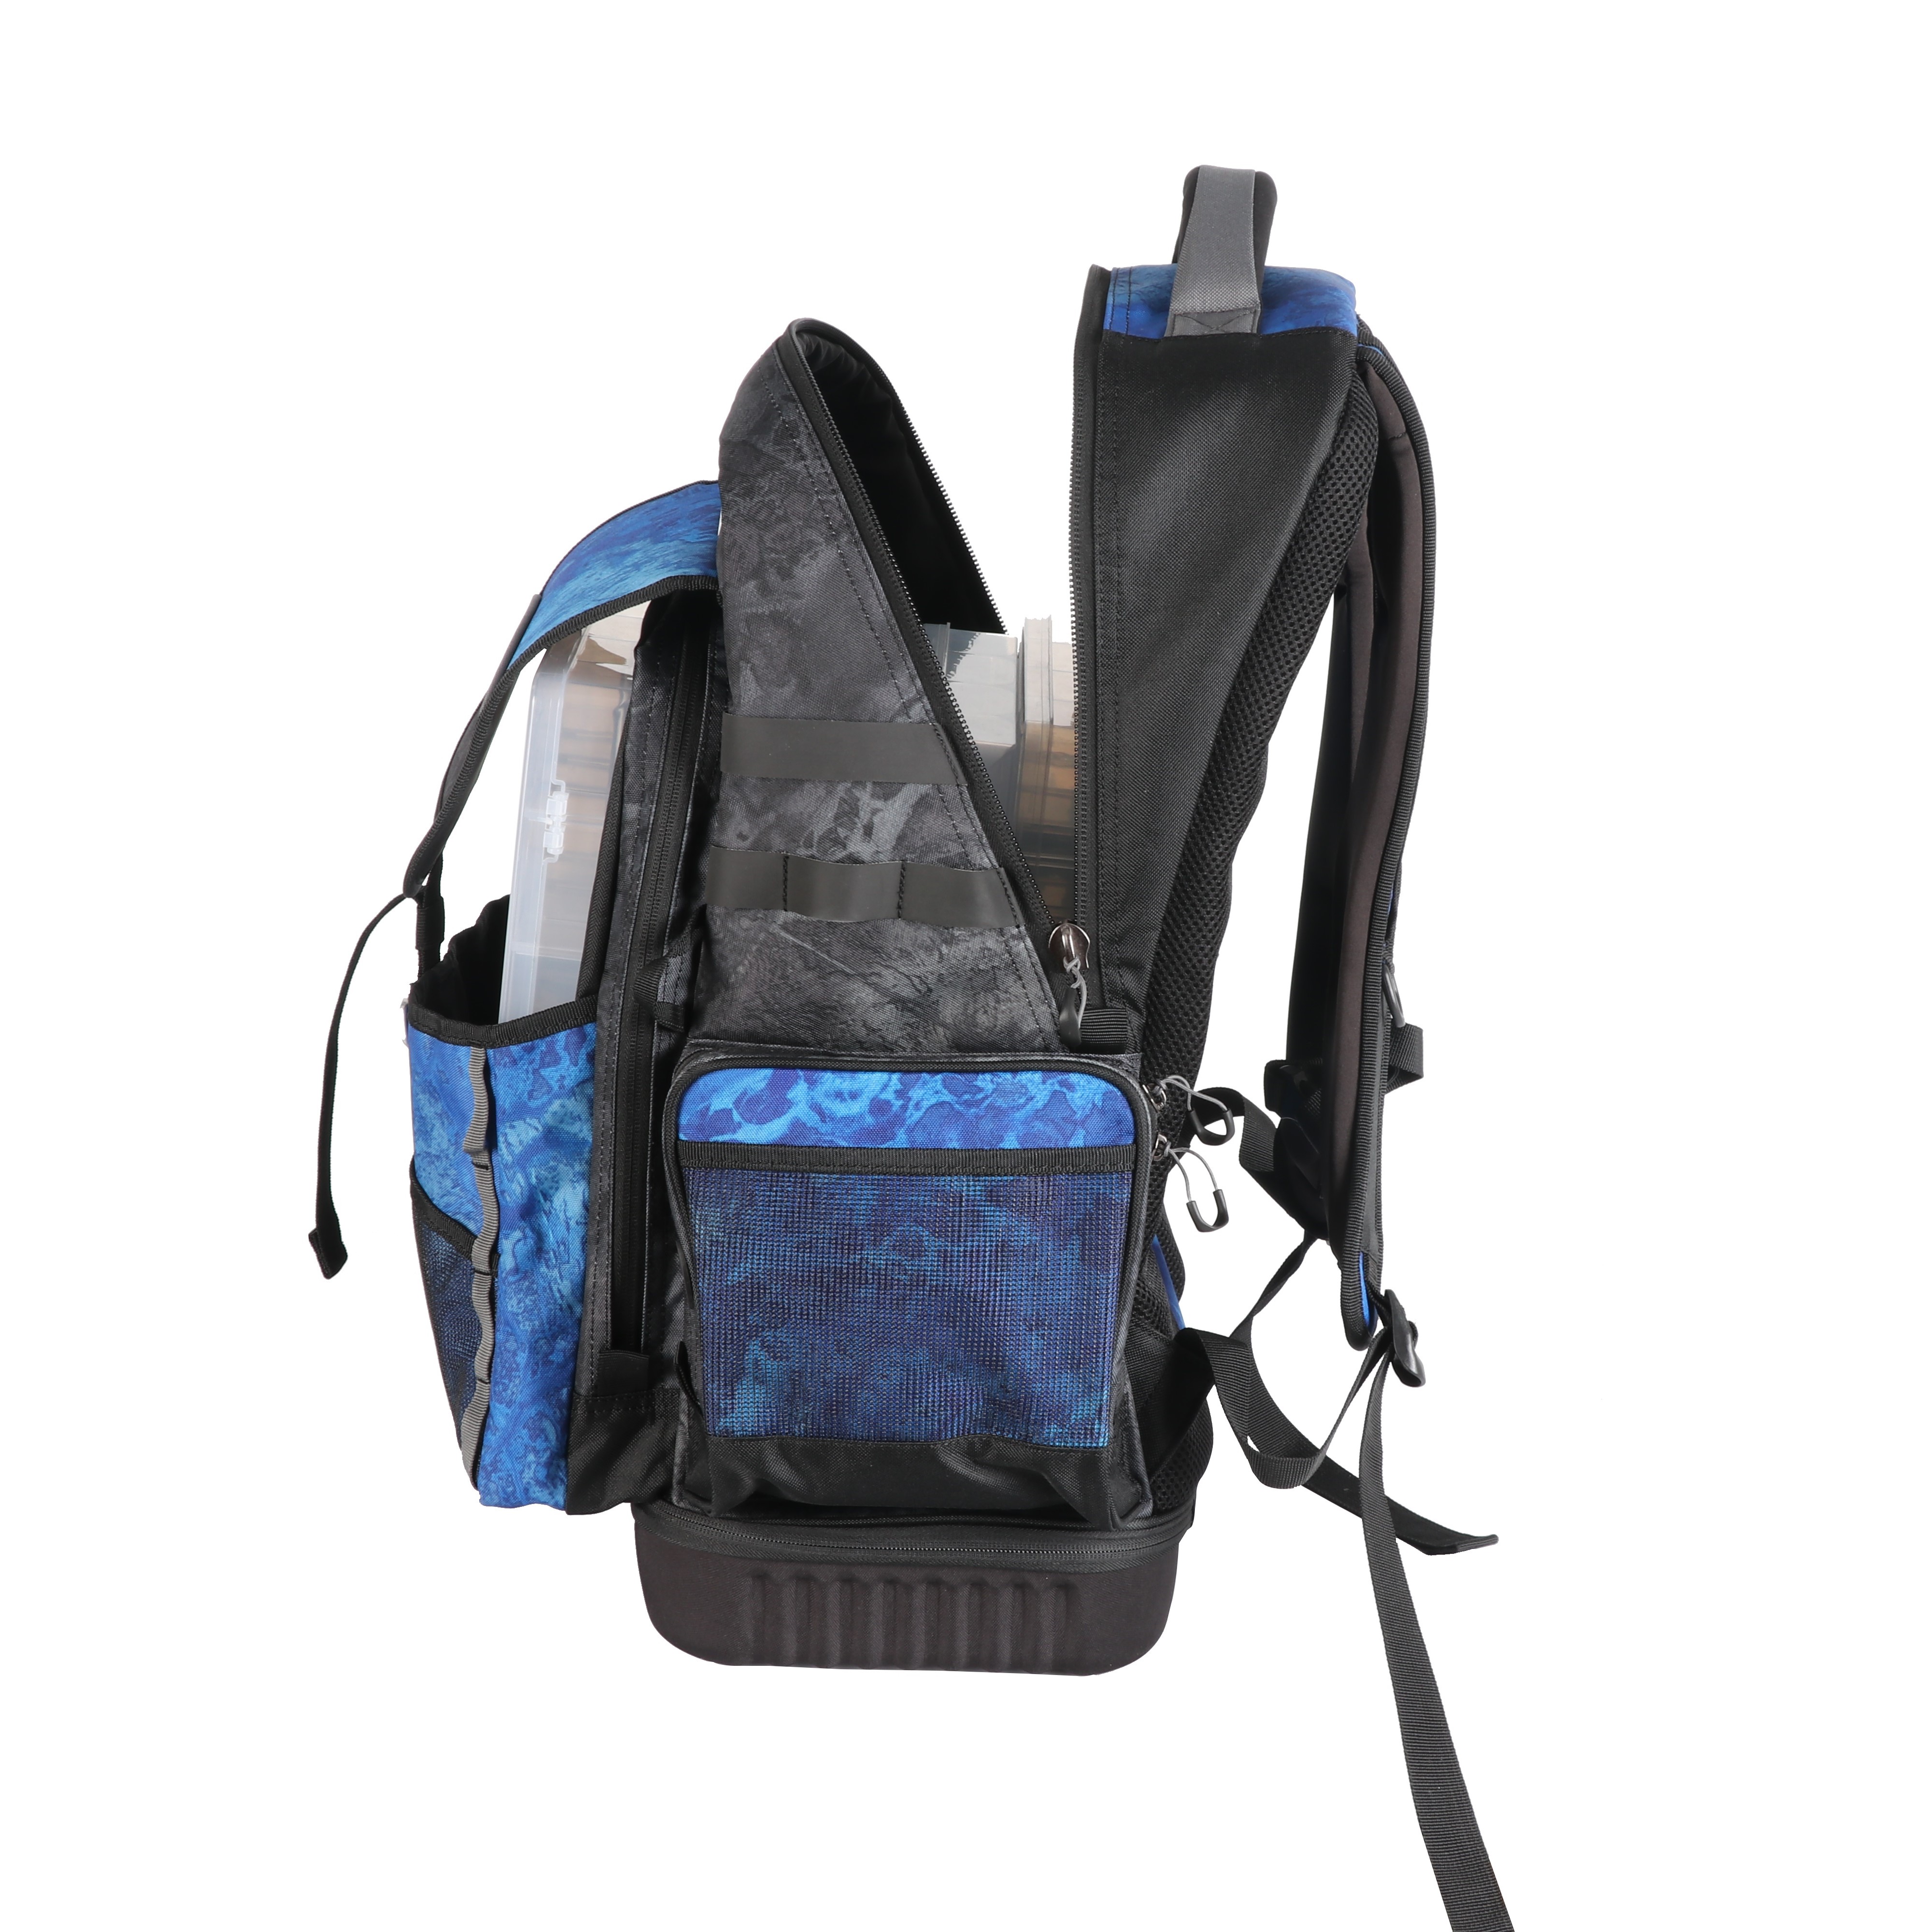 Realtree Large Pro Fishing Tackle Box Storage Backpack, Blue, Adult Unisex, Polyester - image 5 of 8